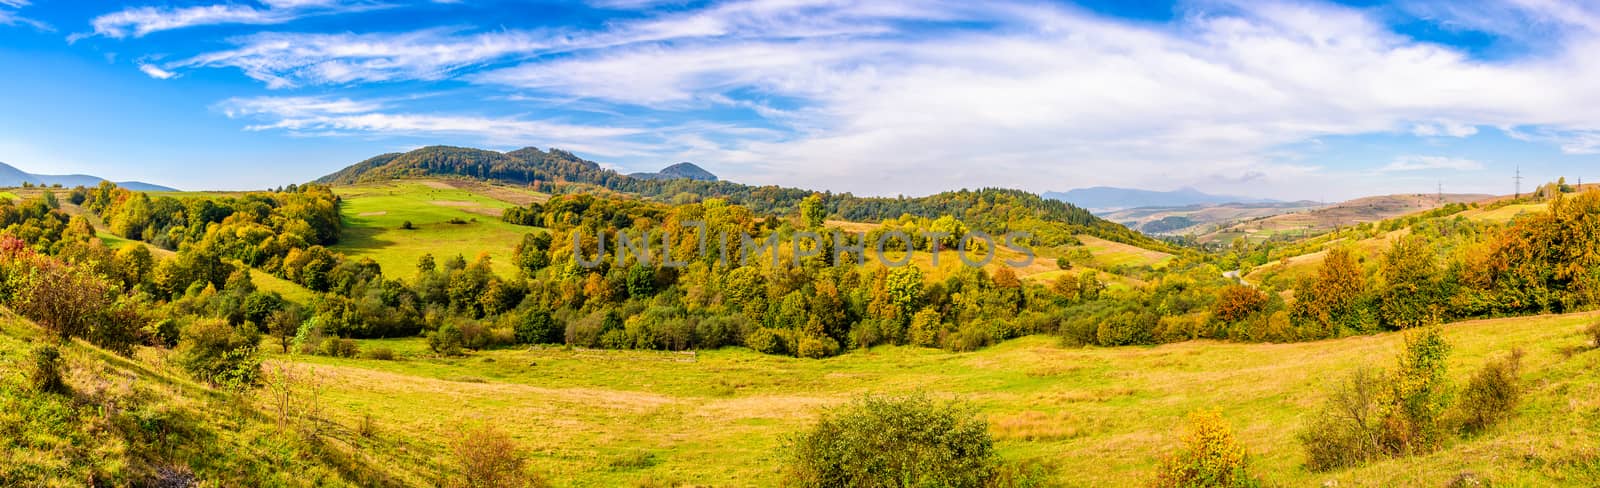 panoramic meadow on hillside of mountain range by Pellinni